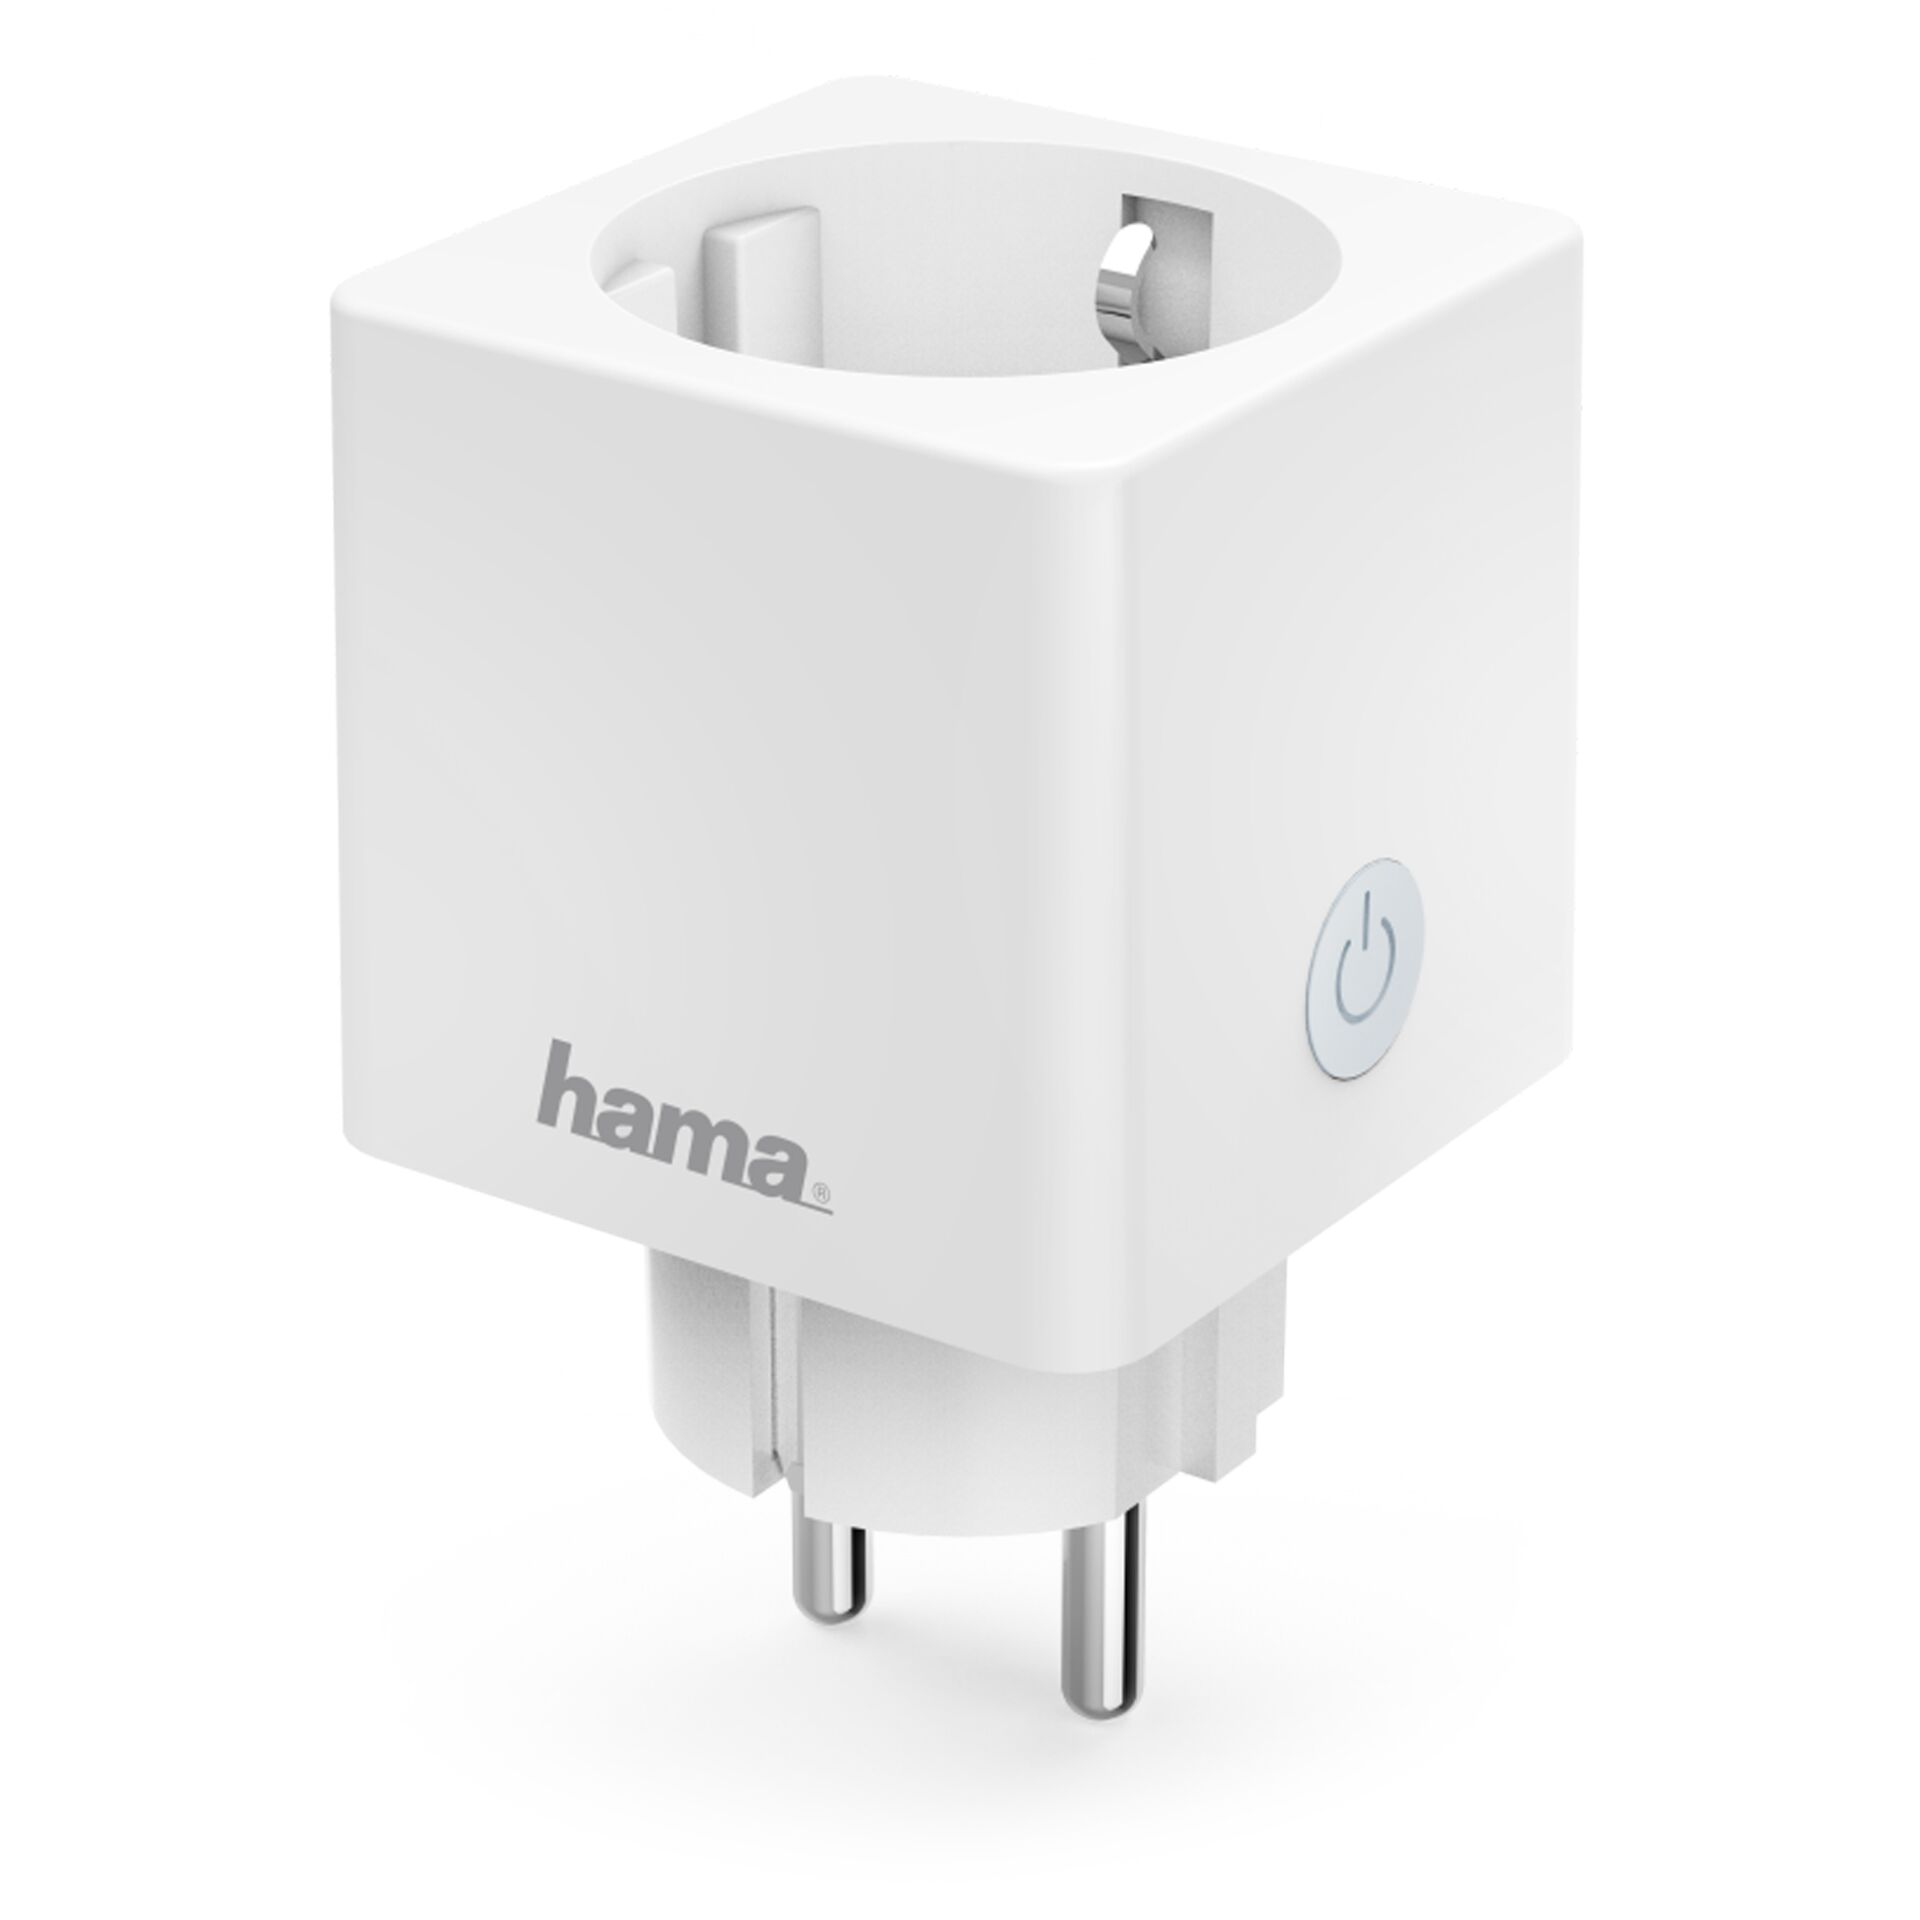 1x3 Hama WiFi-Socket, small Square, 3680W/16A,        176571